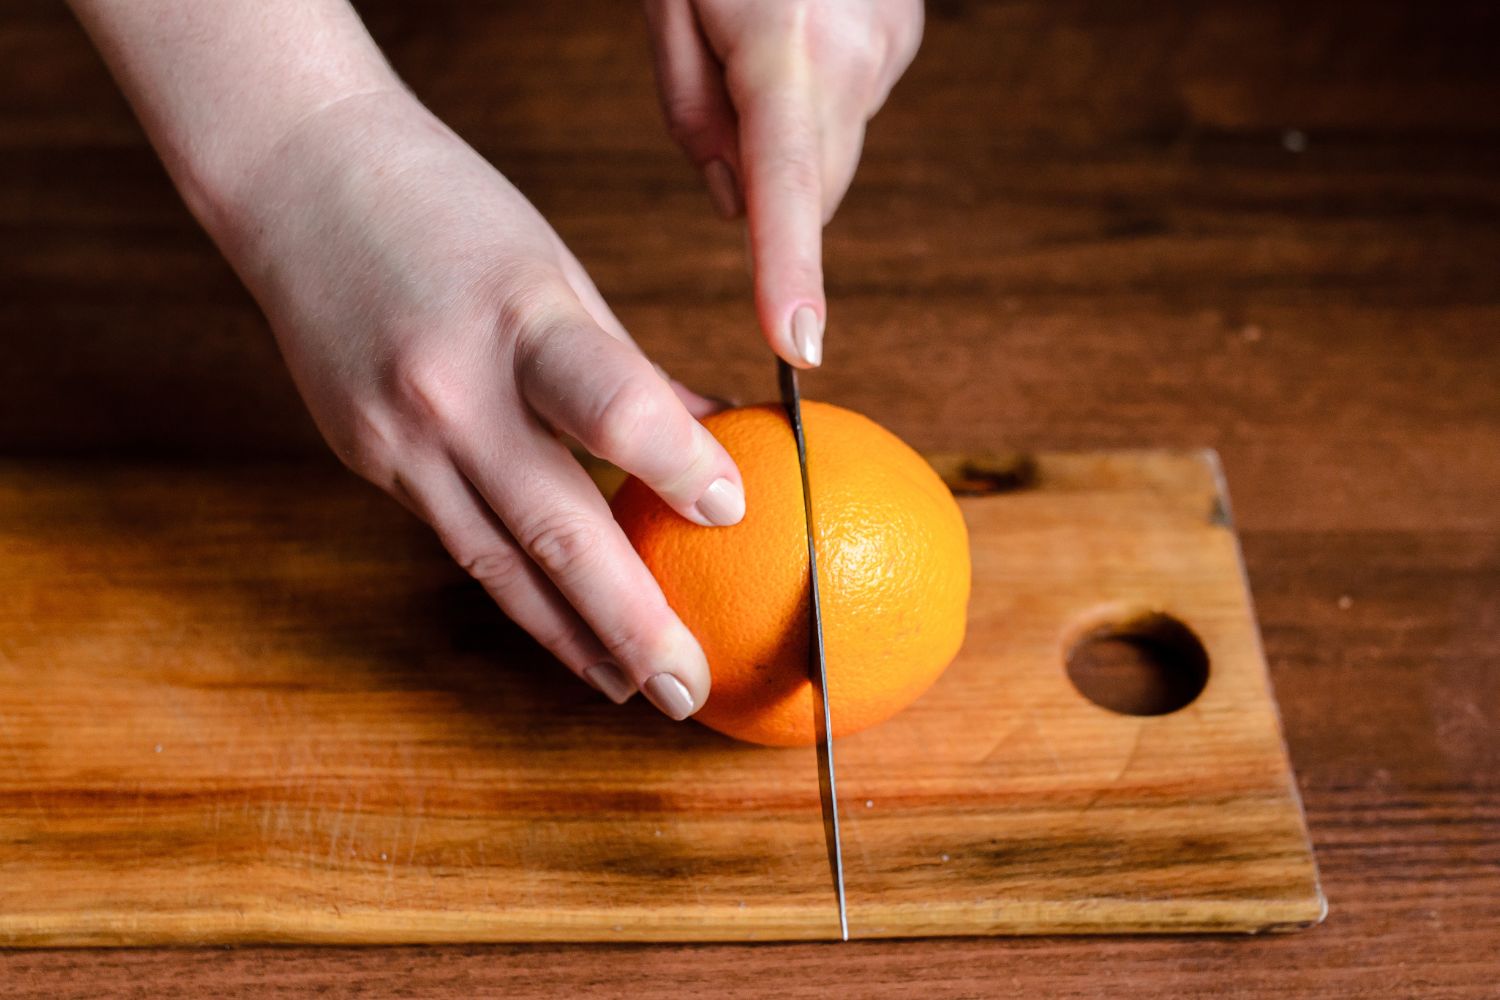 cut the oranges in half crosswise